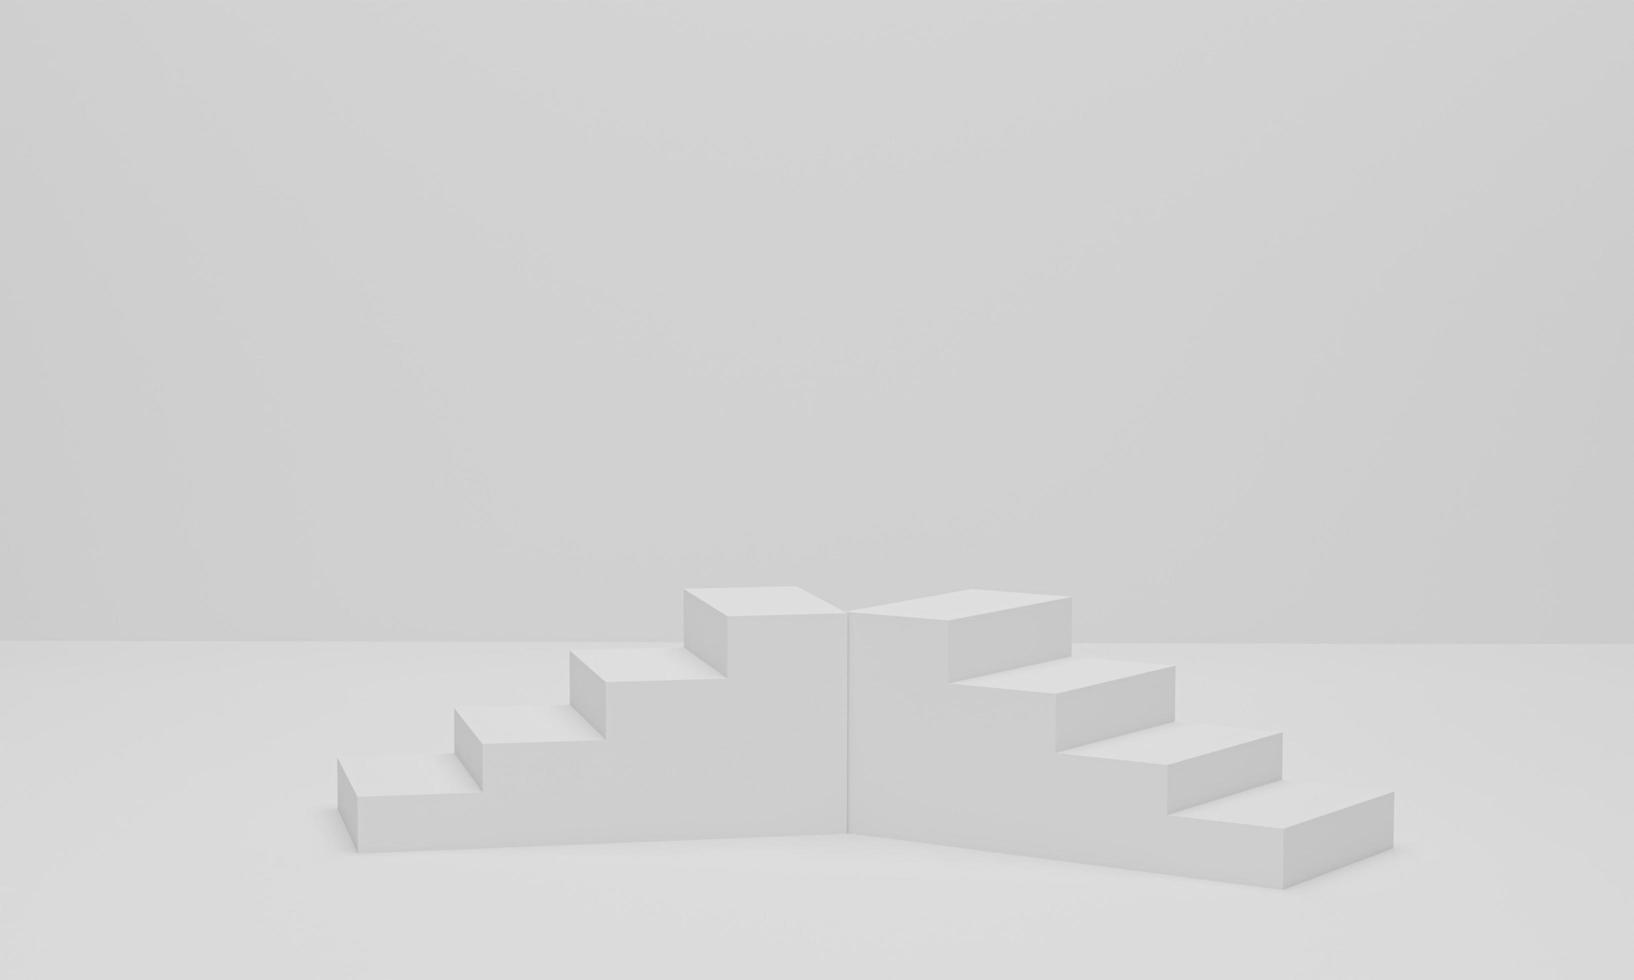 representación 3d fondo mínimo abstracto, escaleras sobre fondo blanco foto